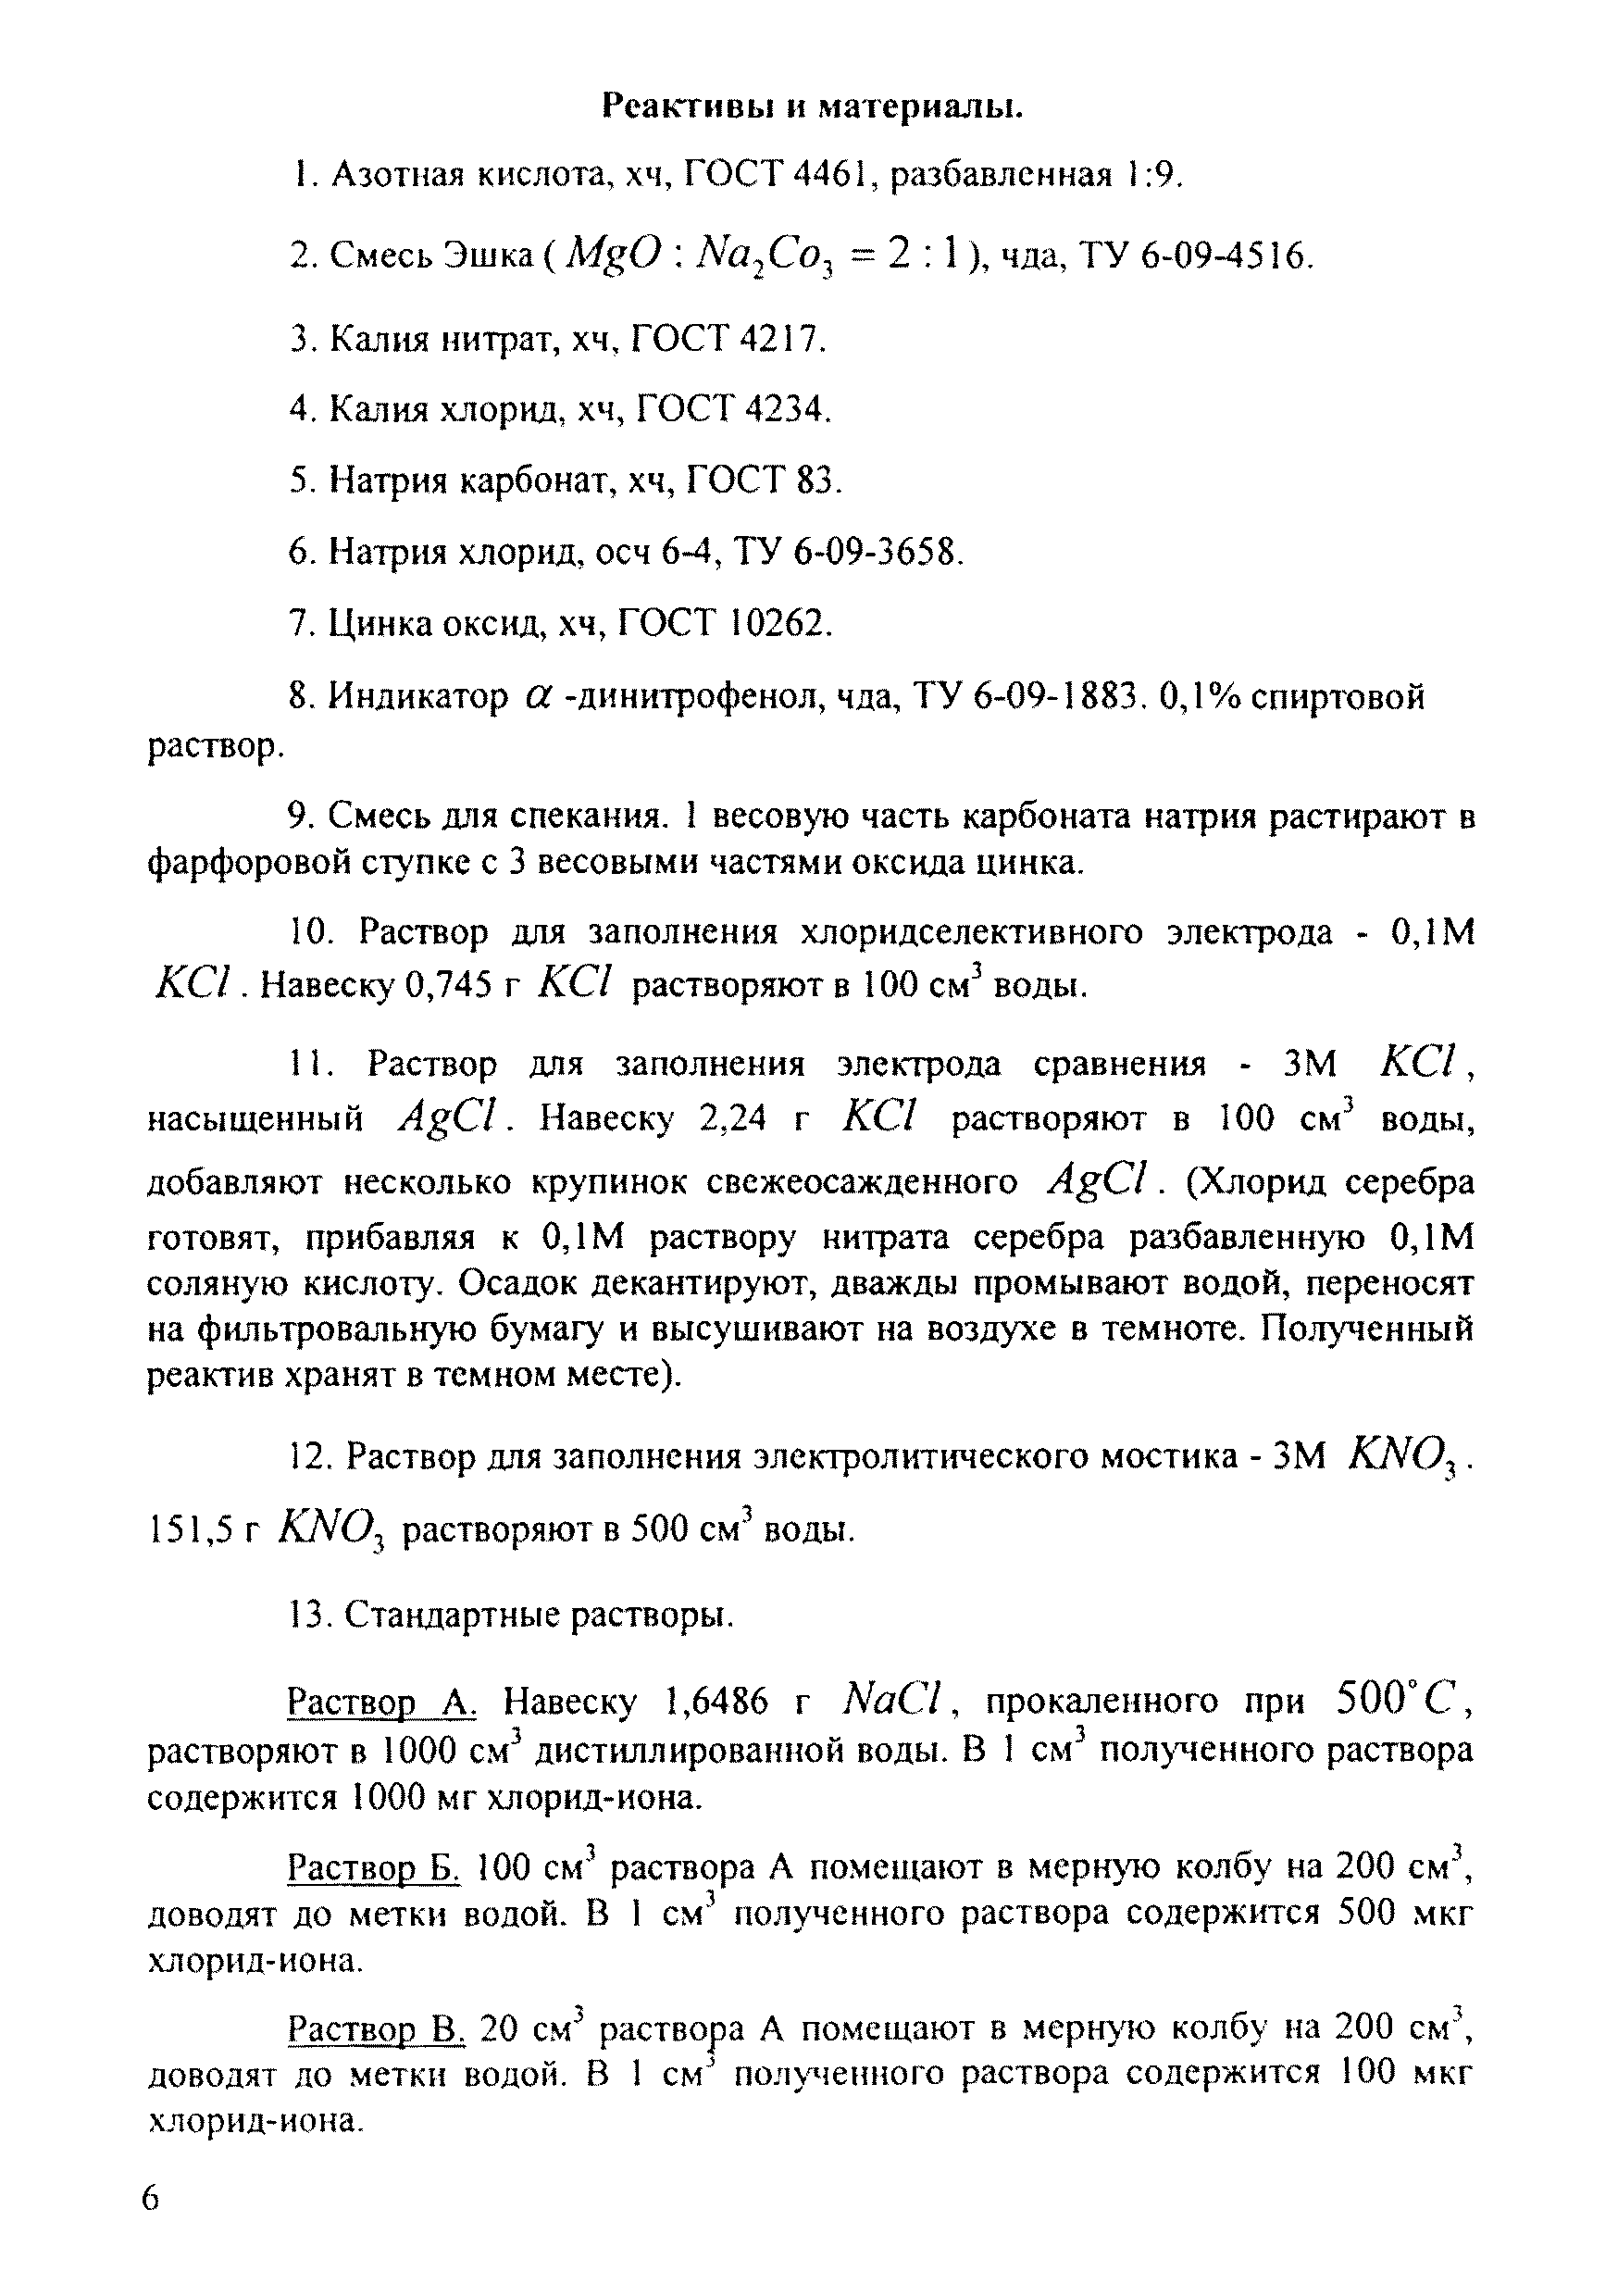 Инструкция НСАМ 358-Х